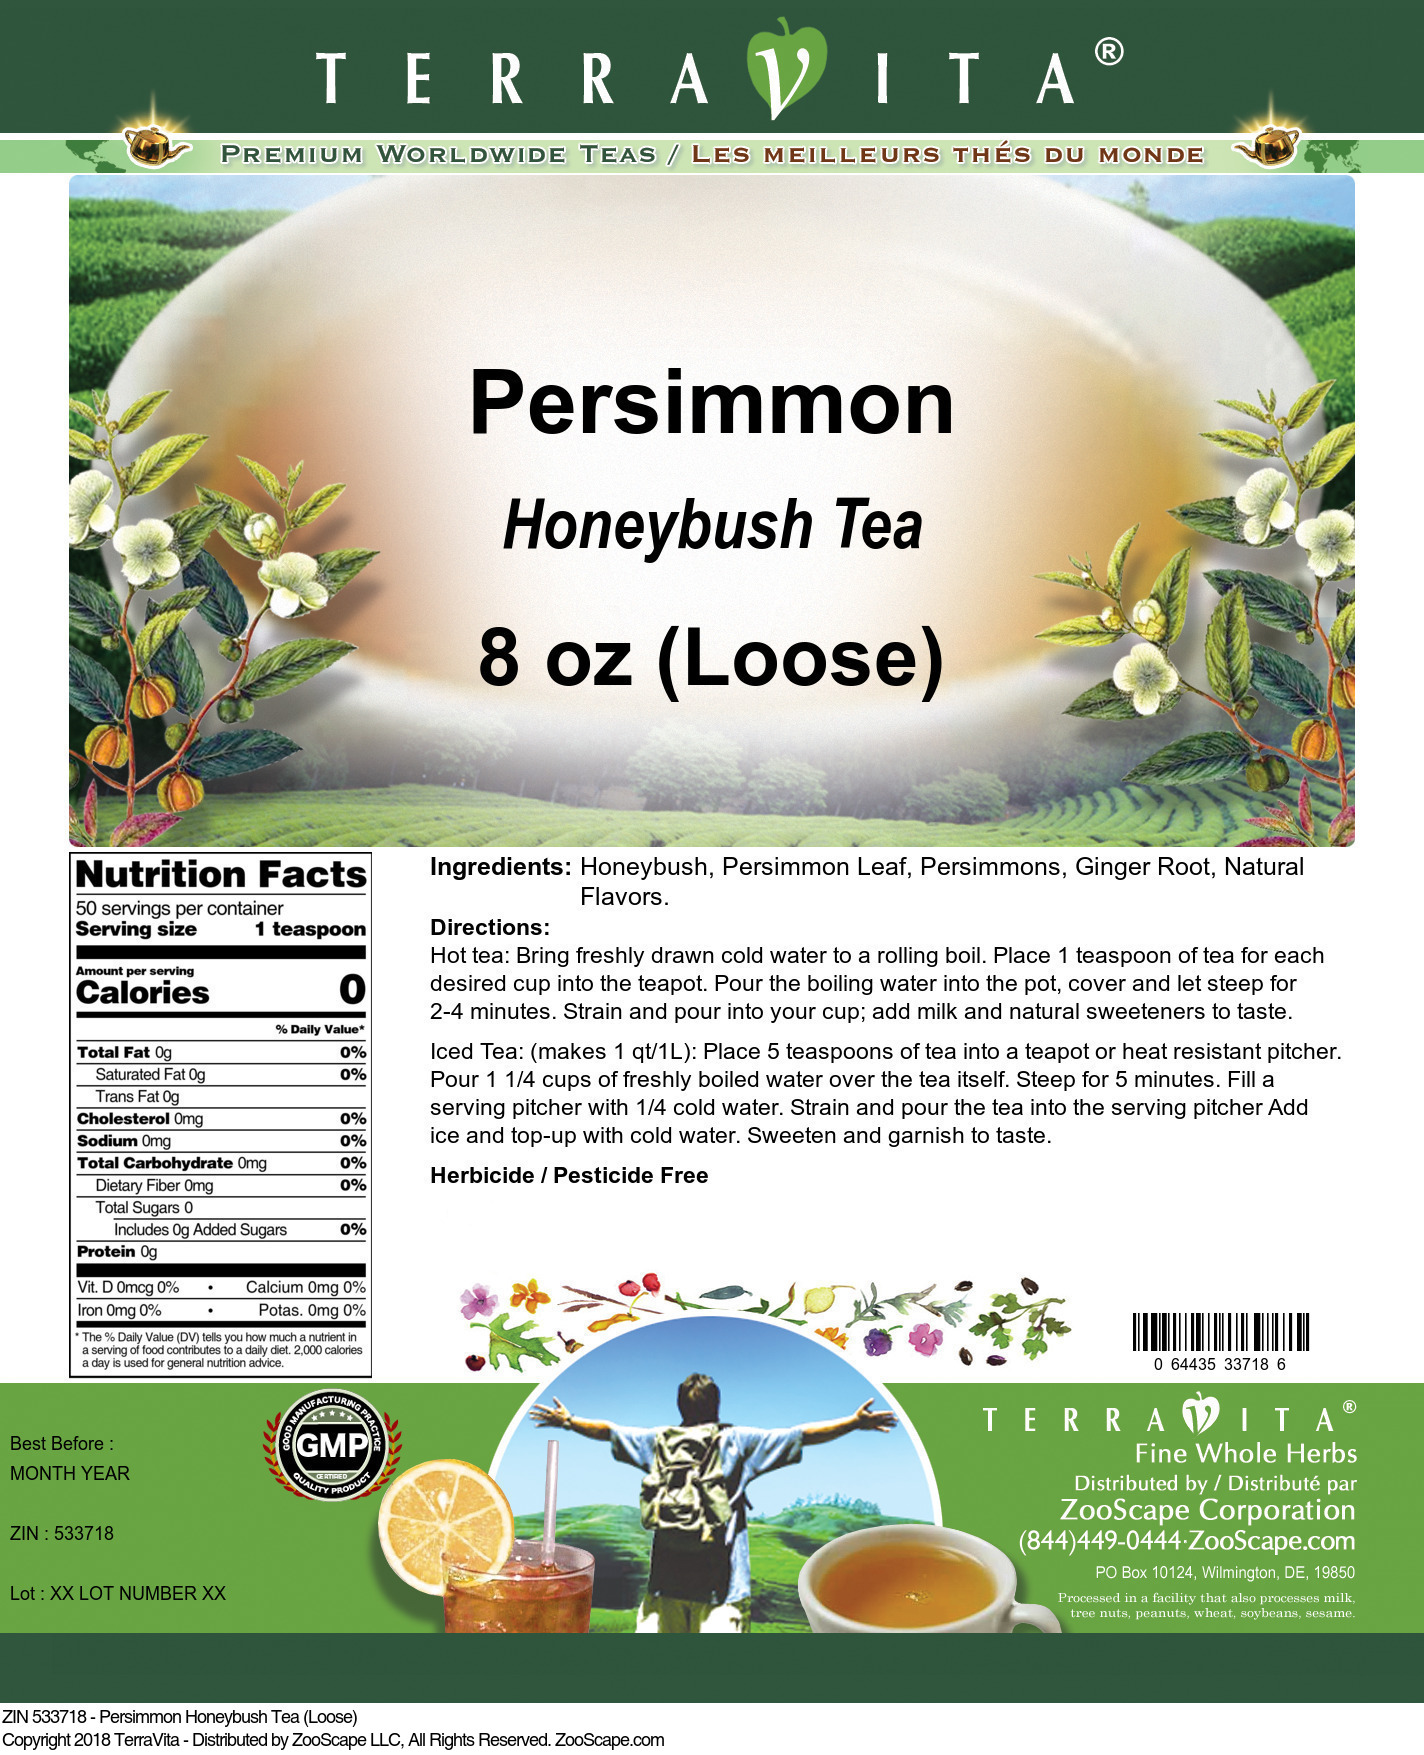 Persimmon Honeybush Tea (Loose) - Label